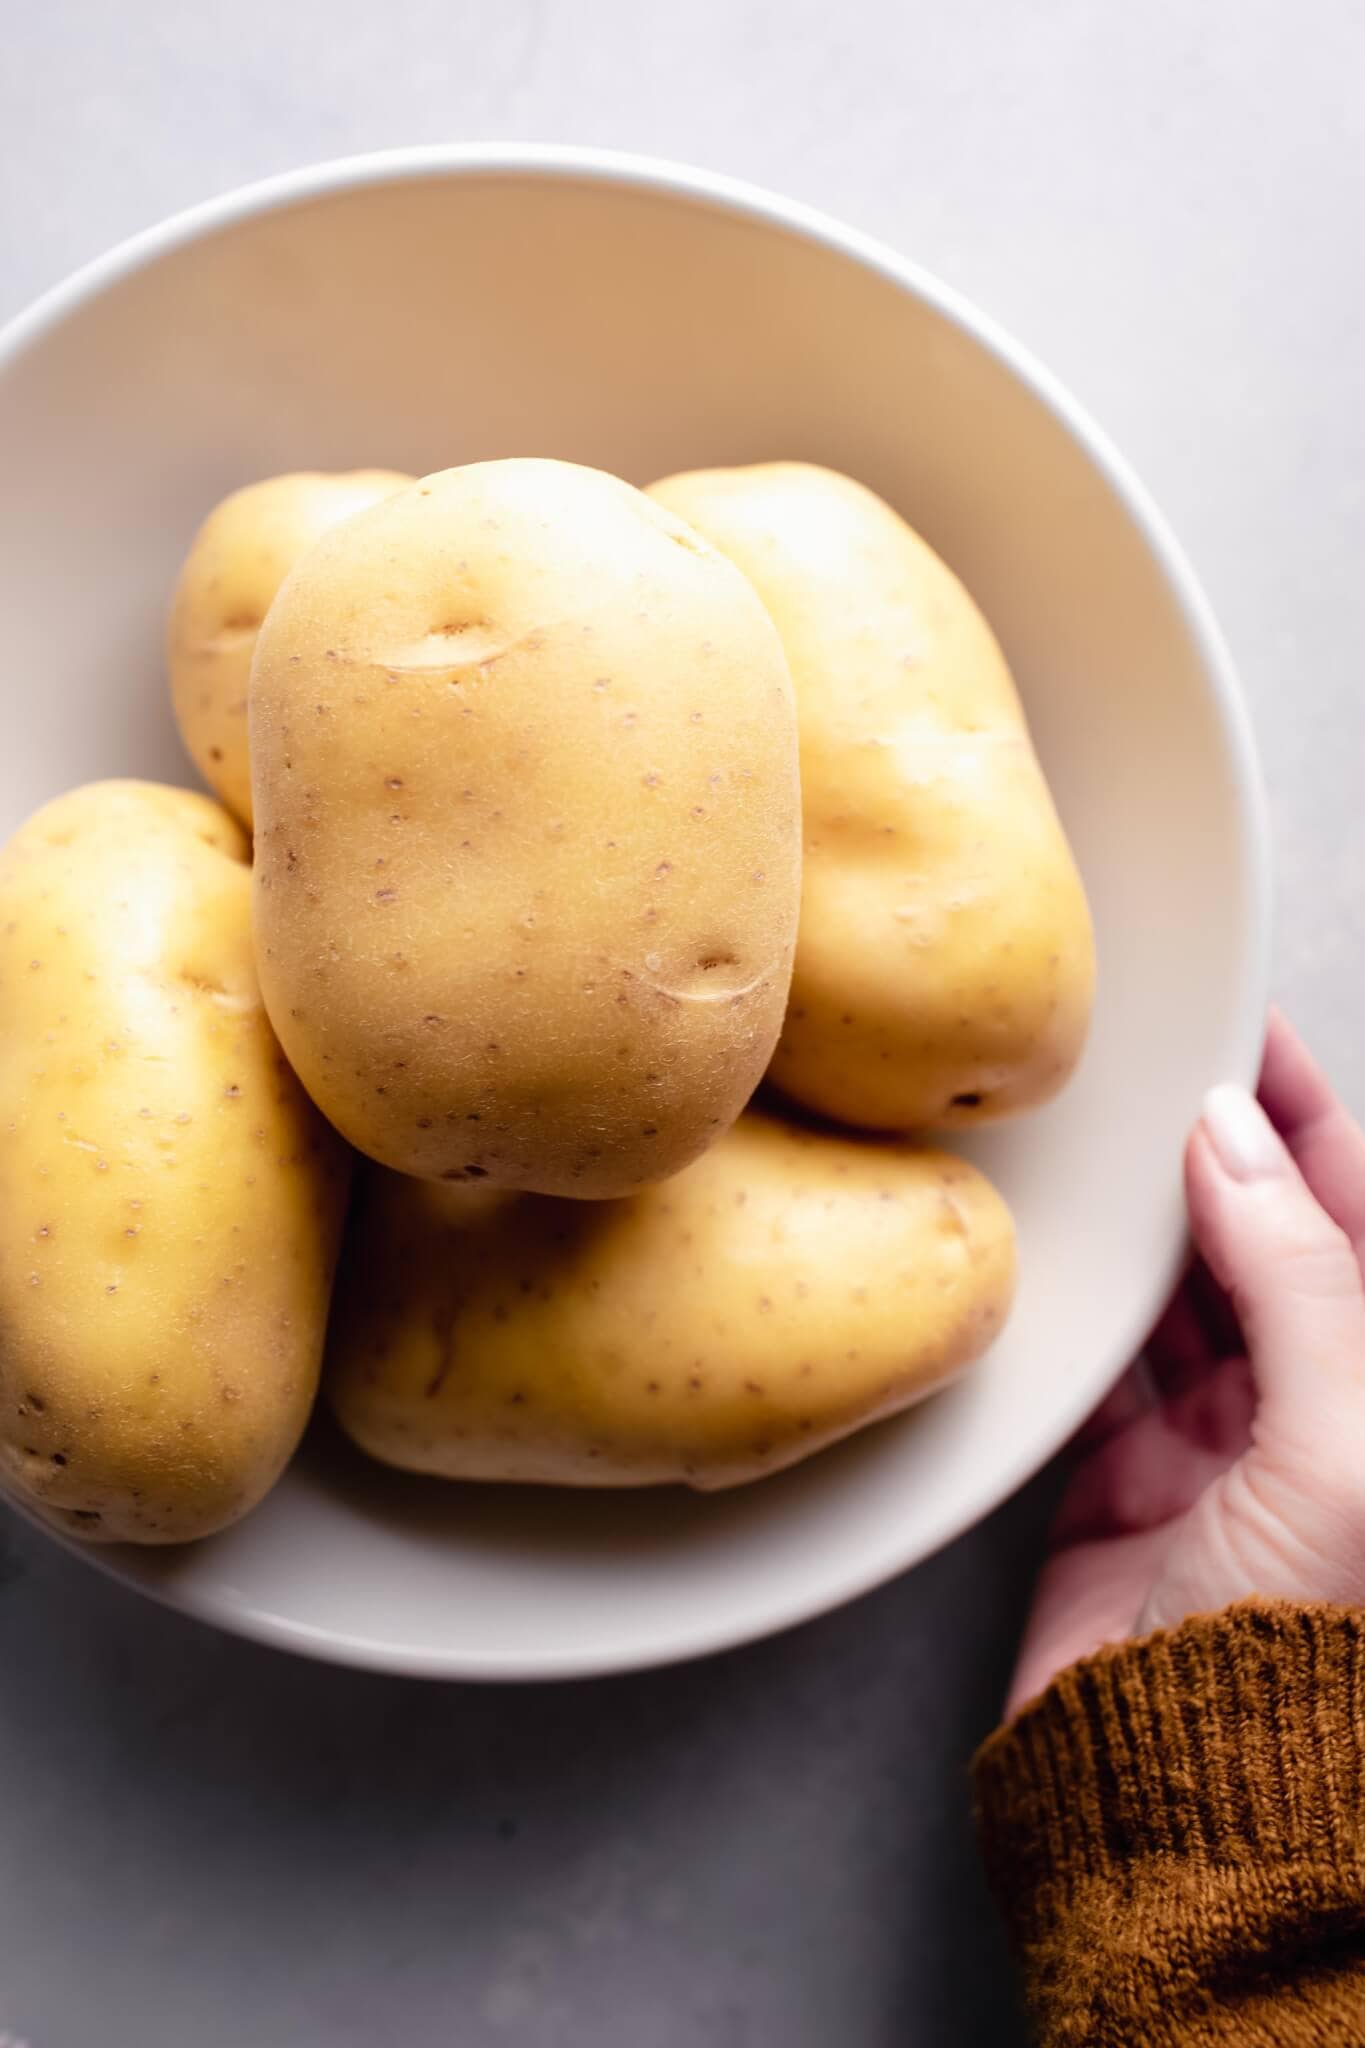 Hand holding bowl of potatoes before peeling.